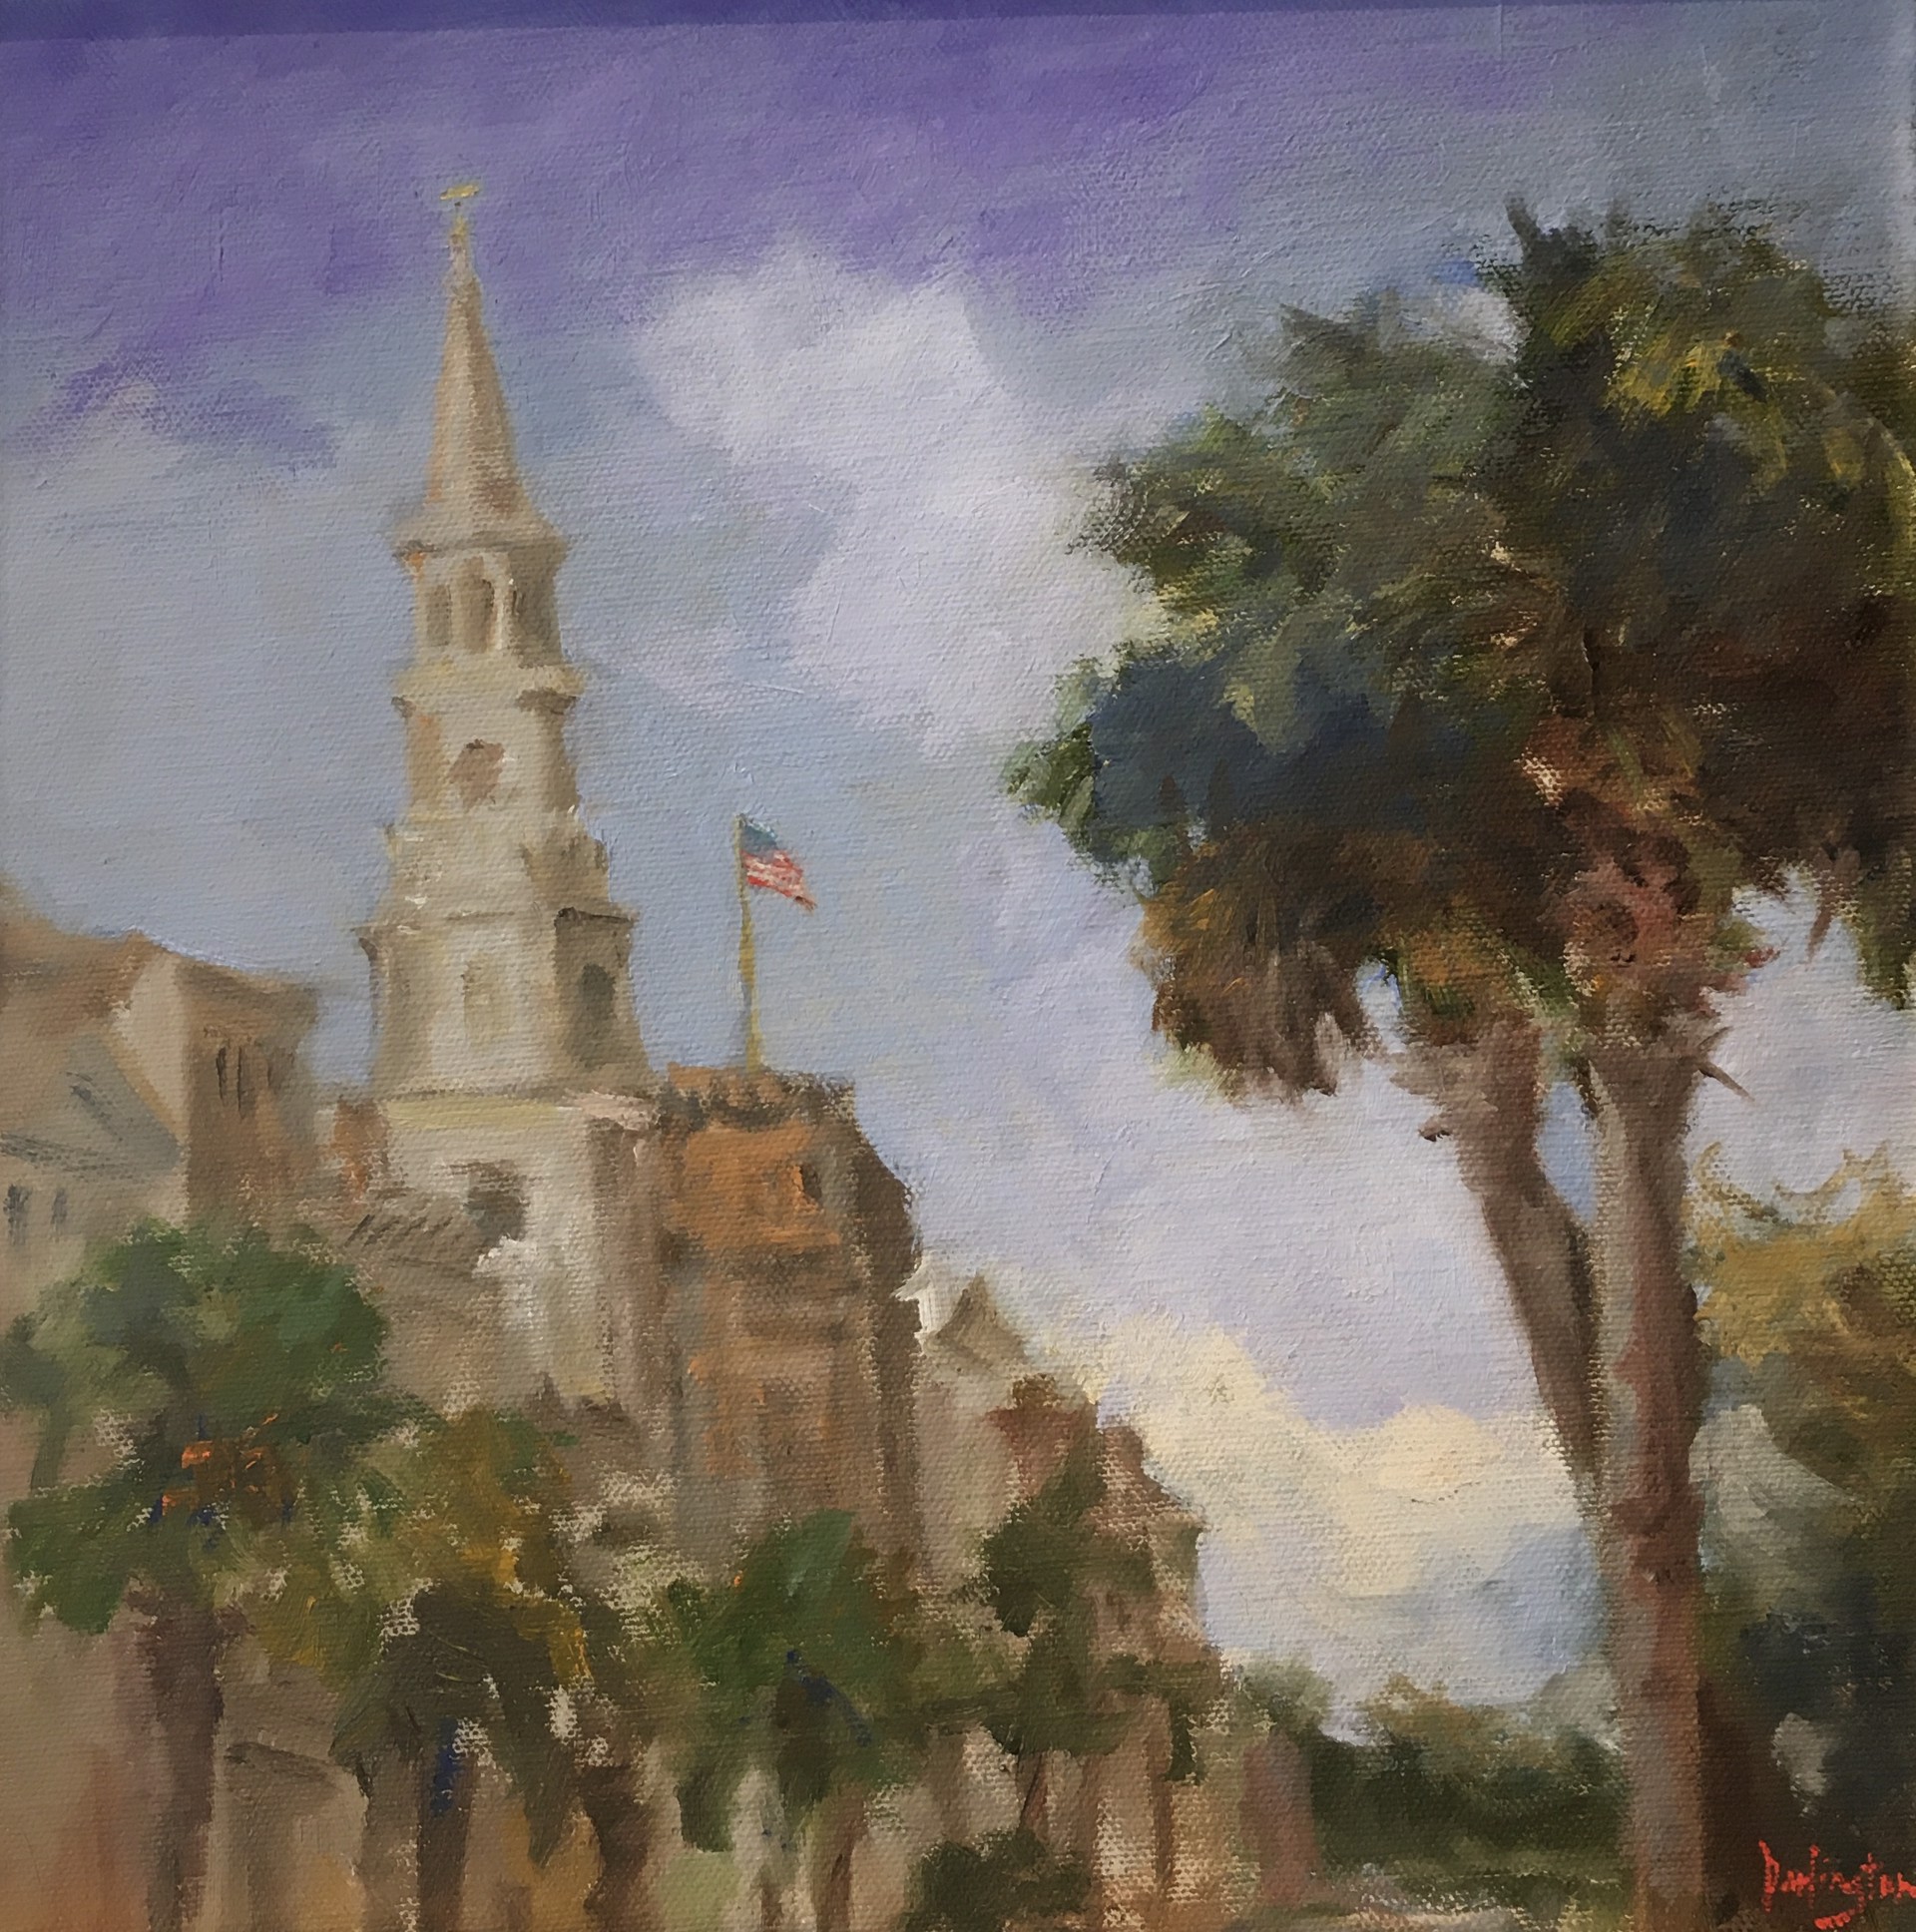 At St. Michael's Church, Charleston by Jim Darlington